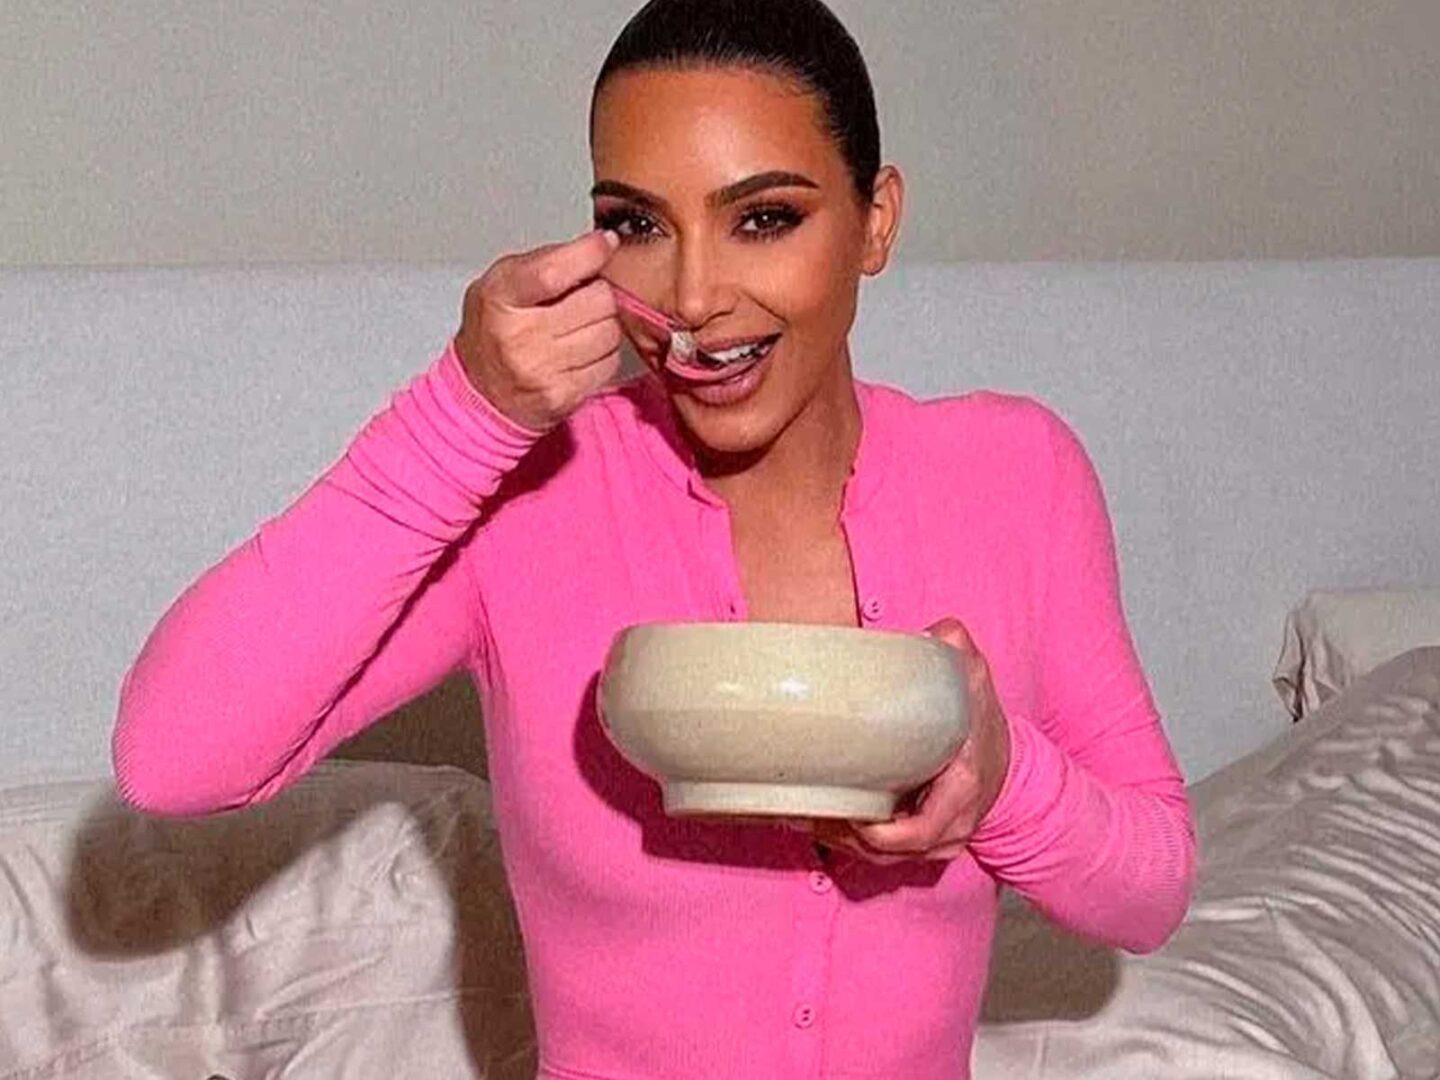 Why does Kim Kardashian eat açaí for breakfast every day?